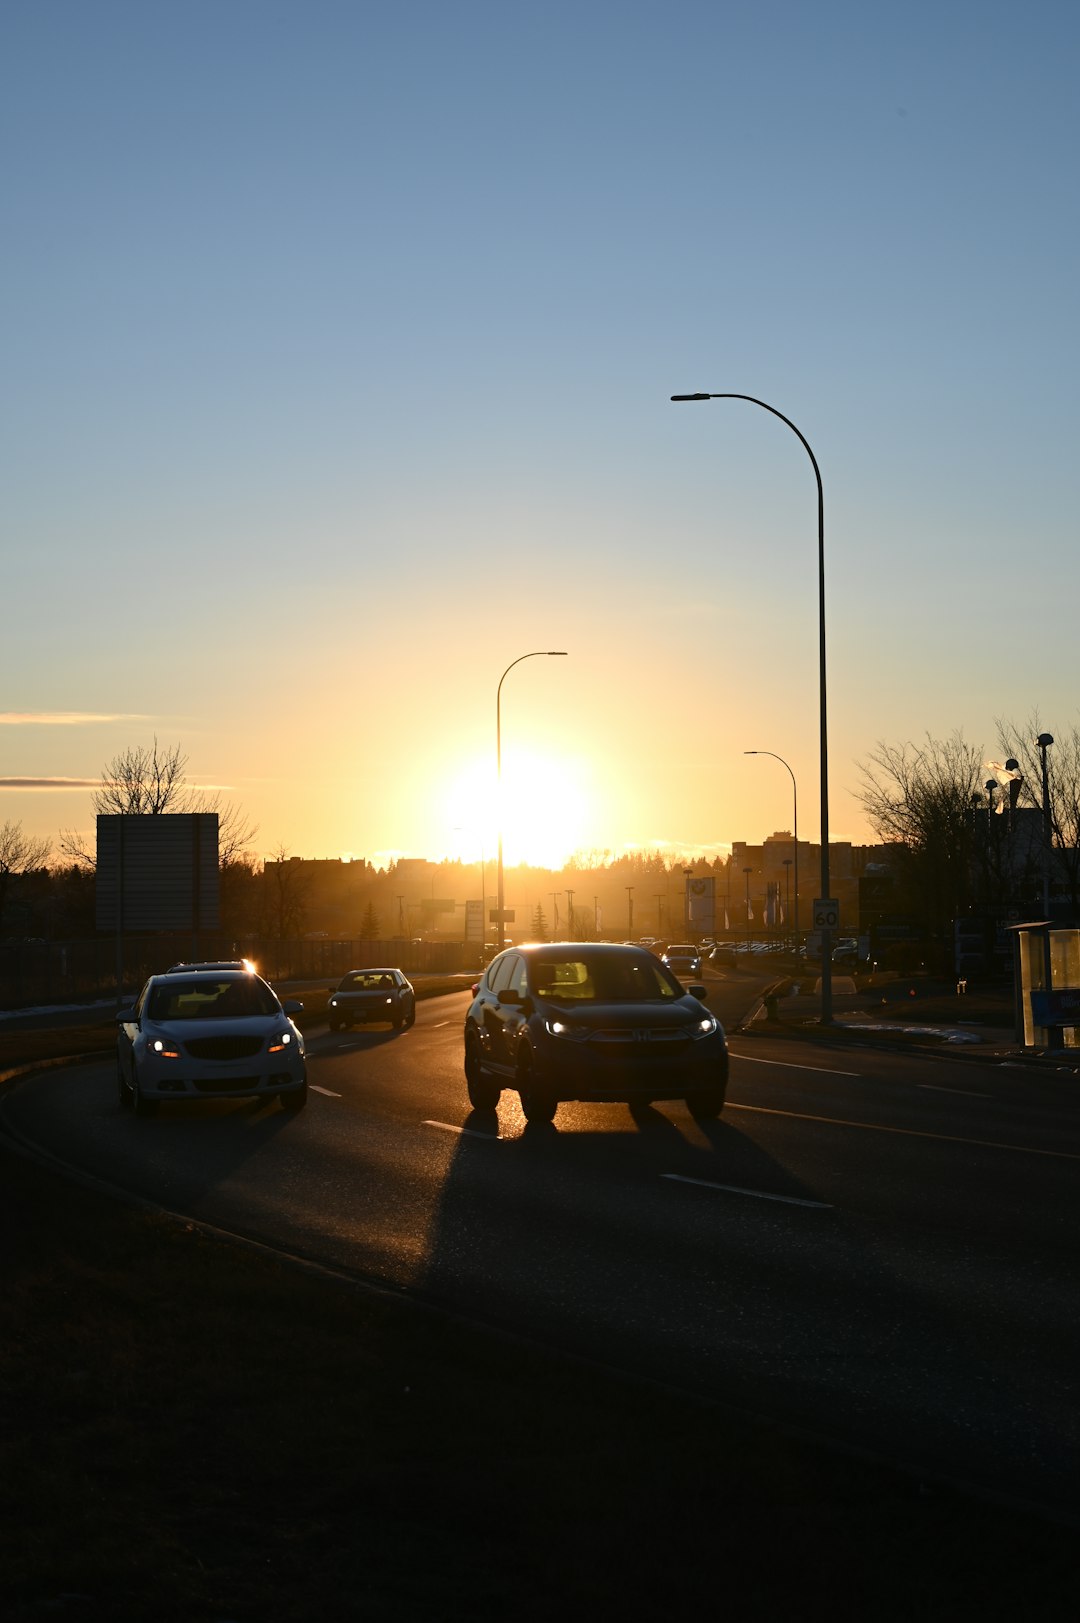 black car on road during sunset